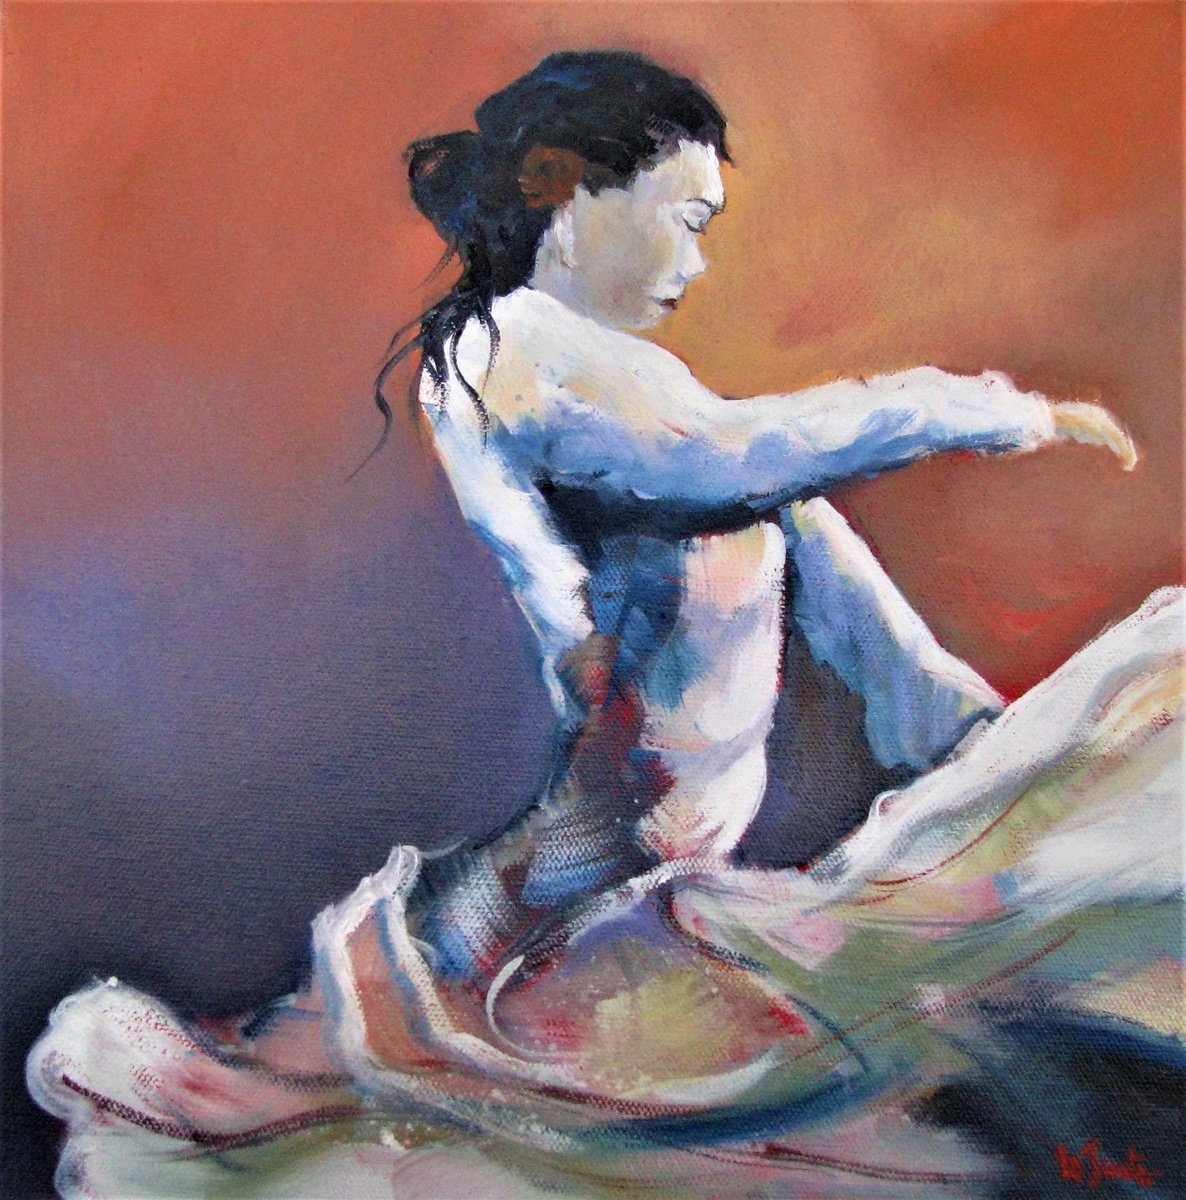 Sevillana dancer by Jean-Nol Le Junter